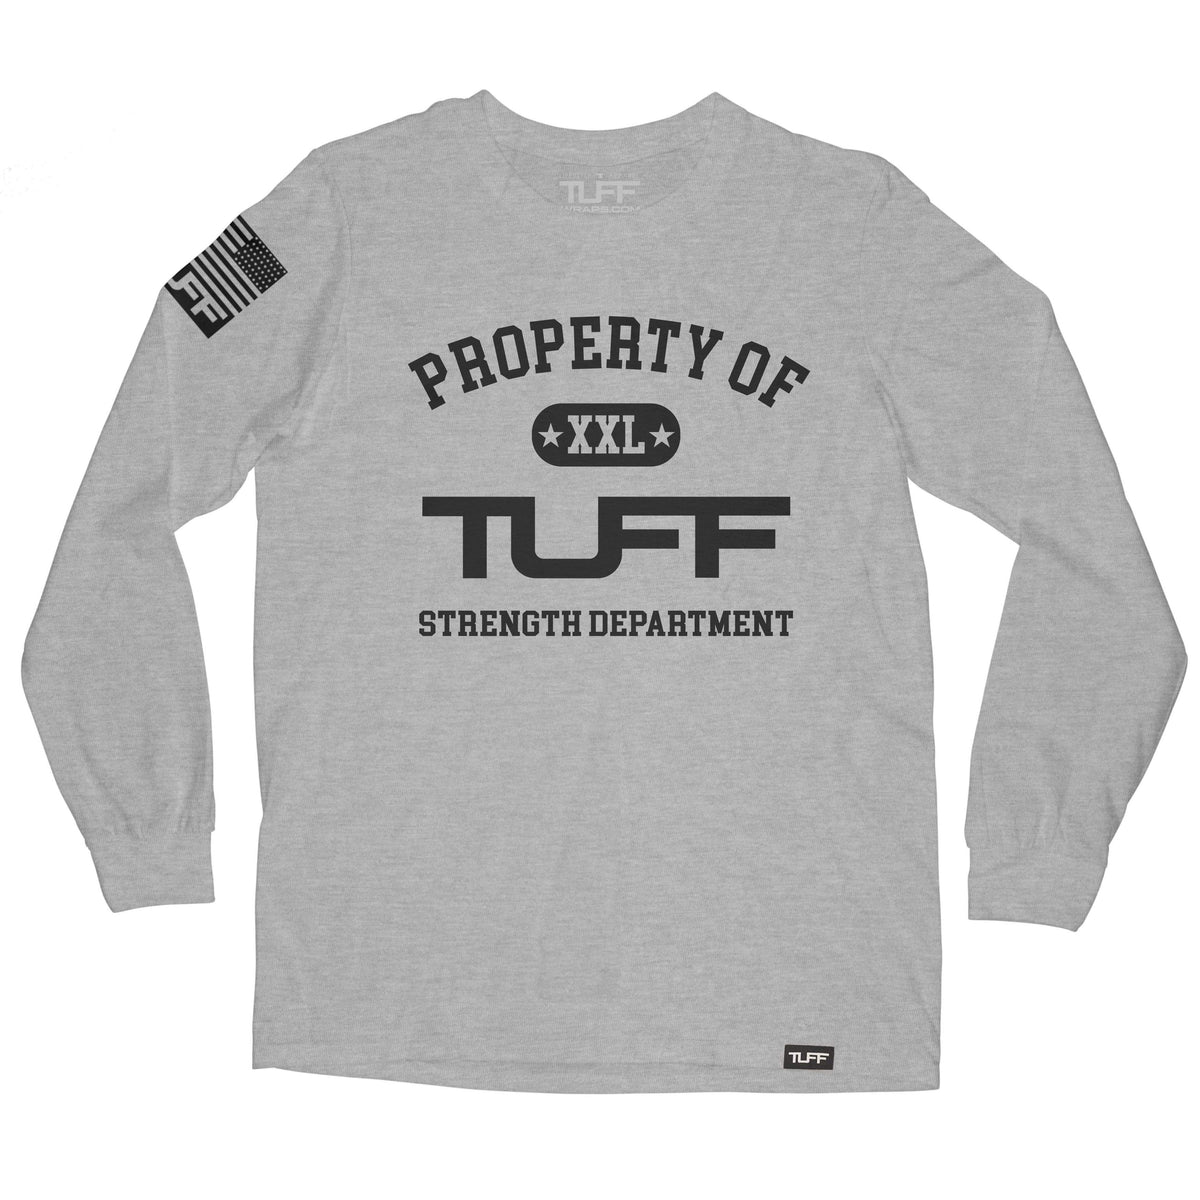 Property of TUFF Long Sleeve Tee S / Heather Gray TuffWraps.com